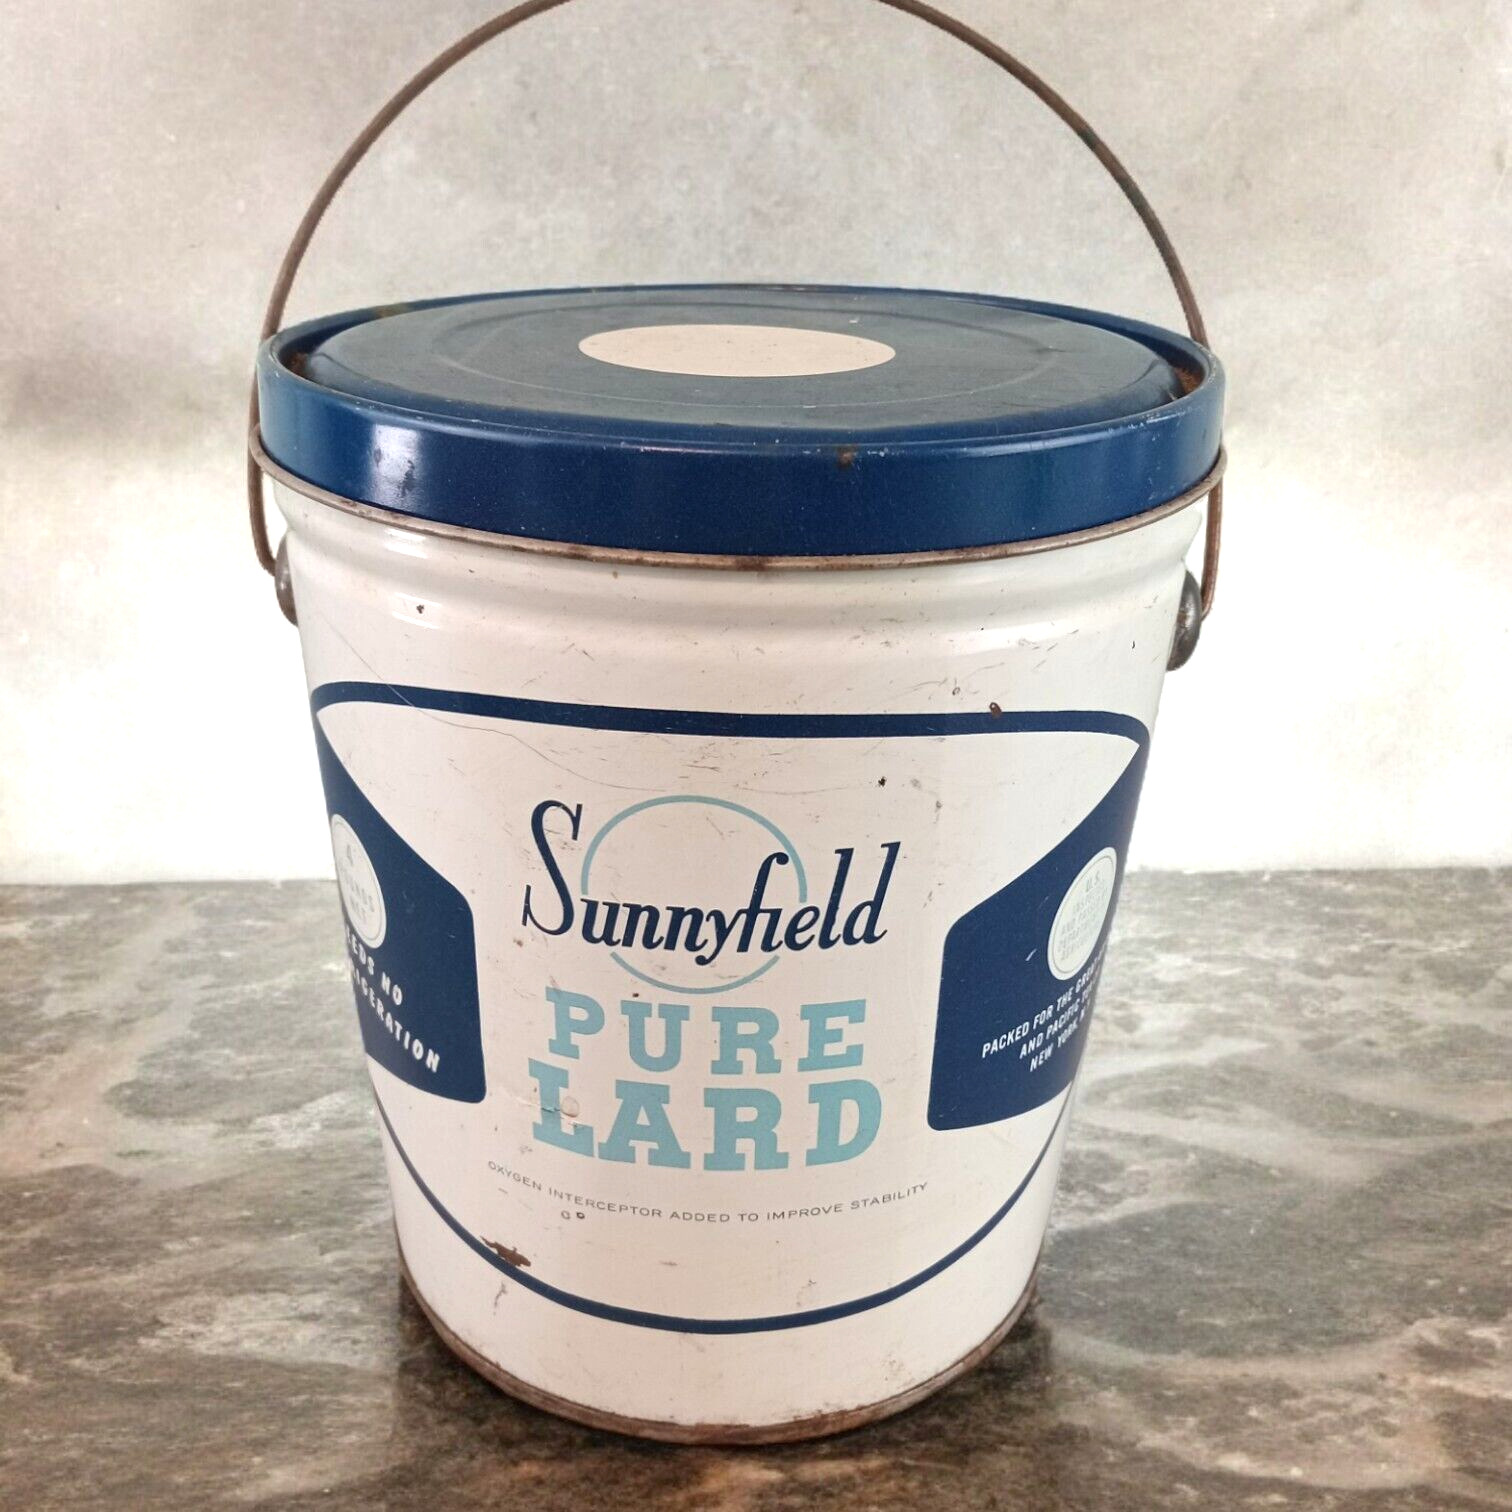 SUNNYFIELD Pure Lard Great Atlantic & Pacific Tea Co. NY 4 Lb. Lard Tin Pail Can